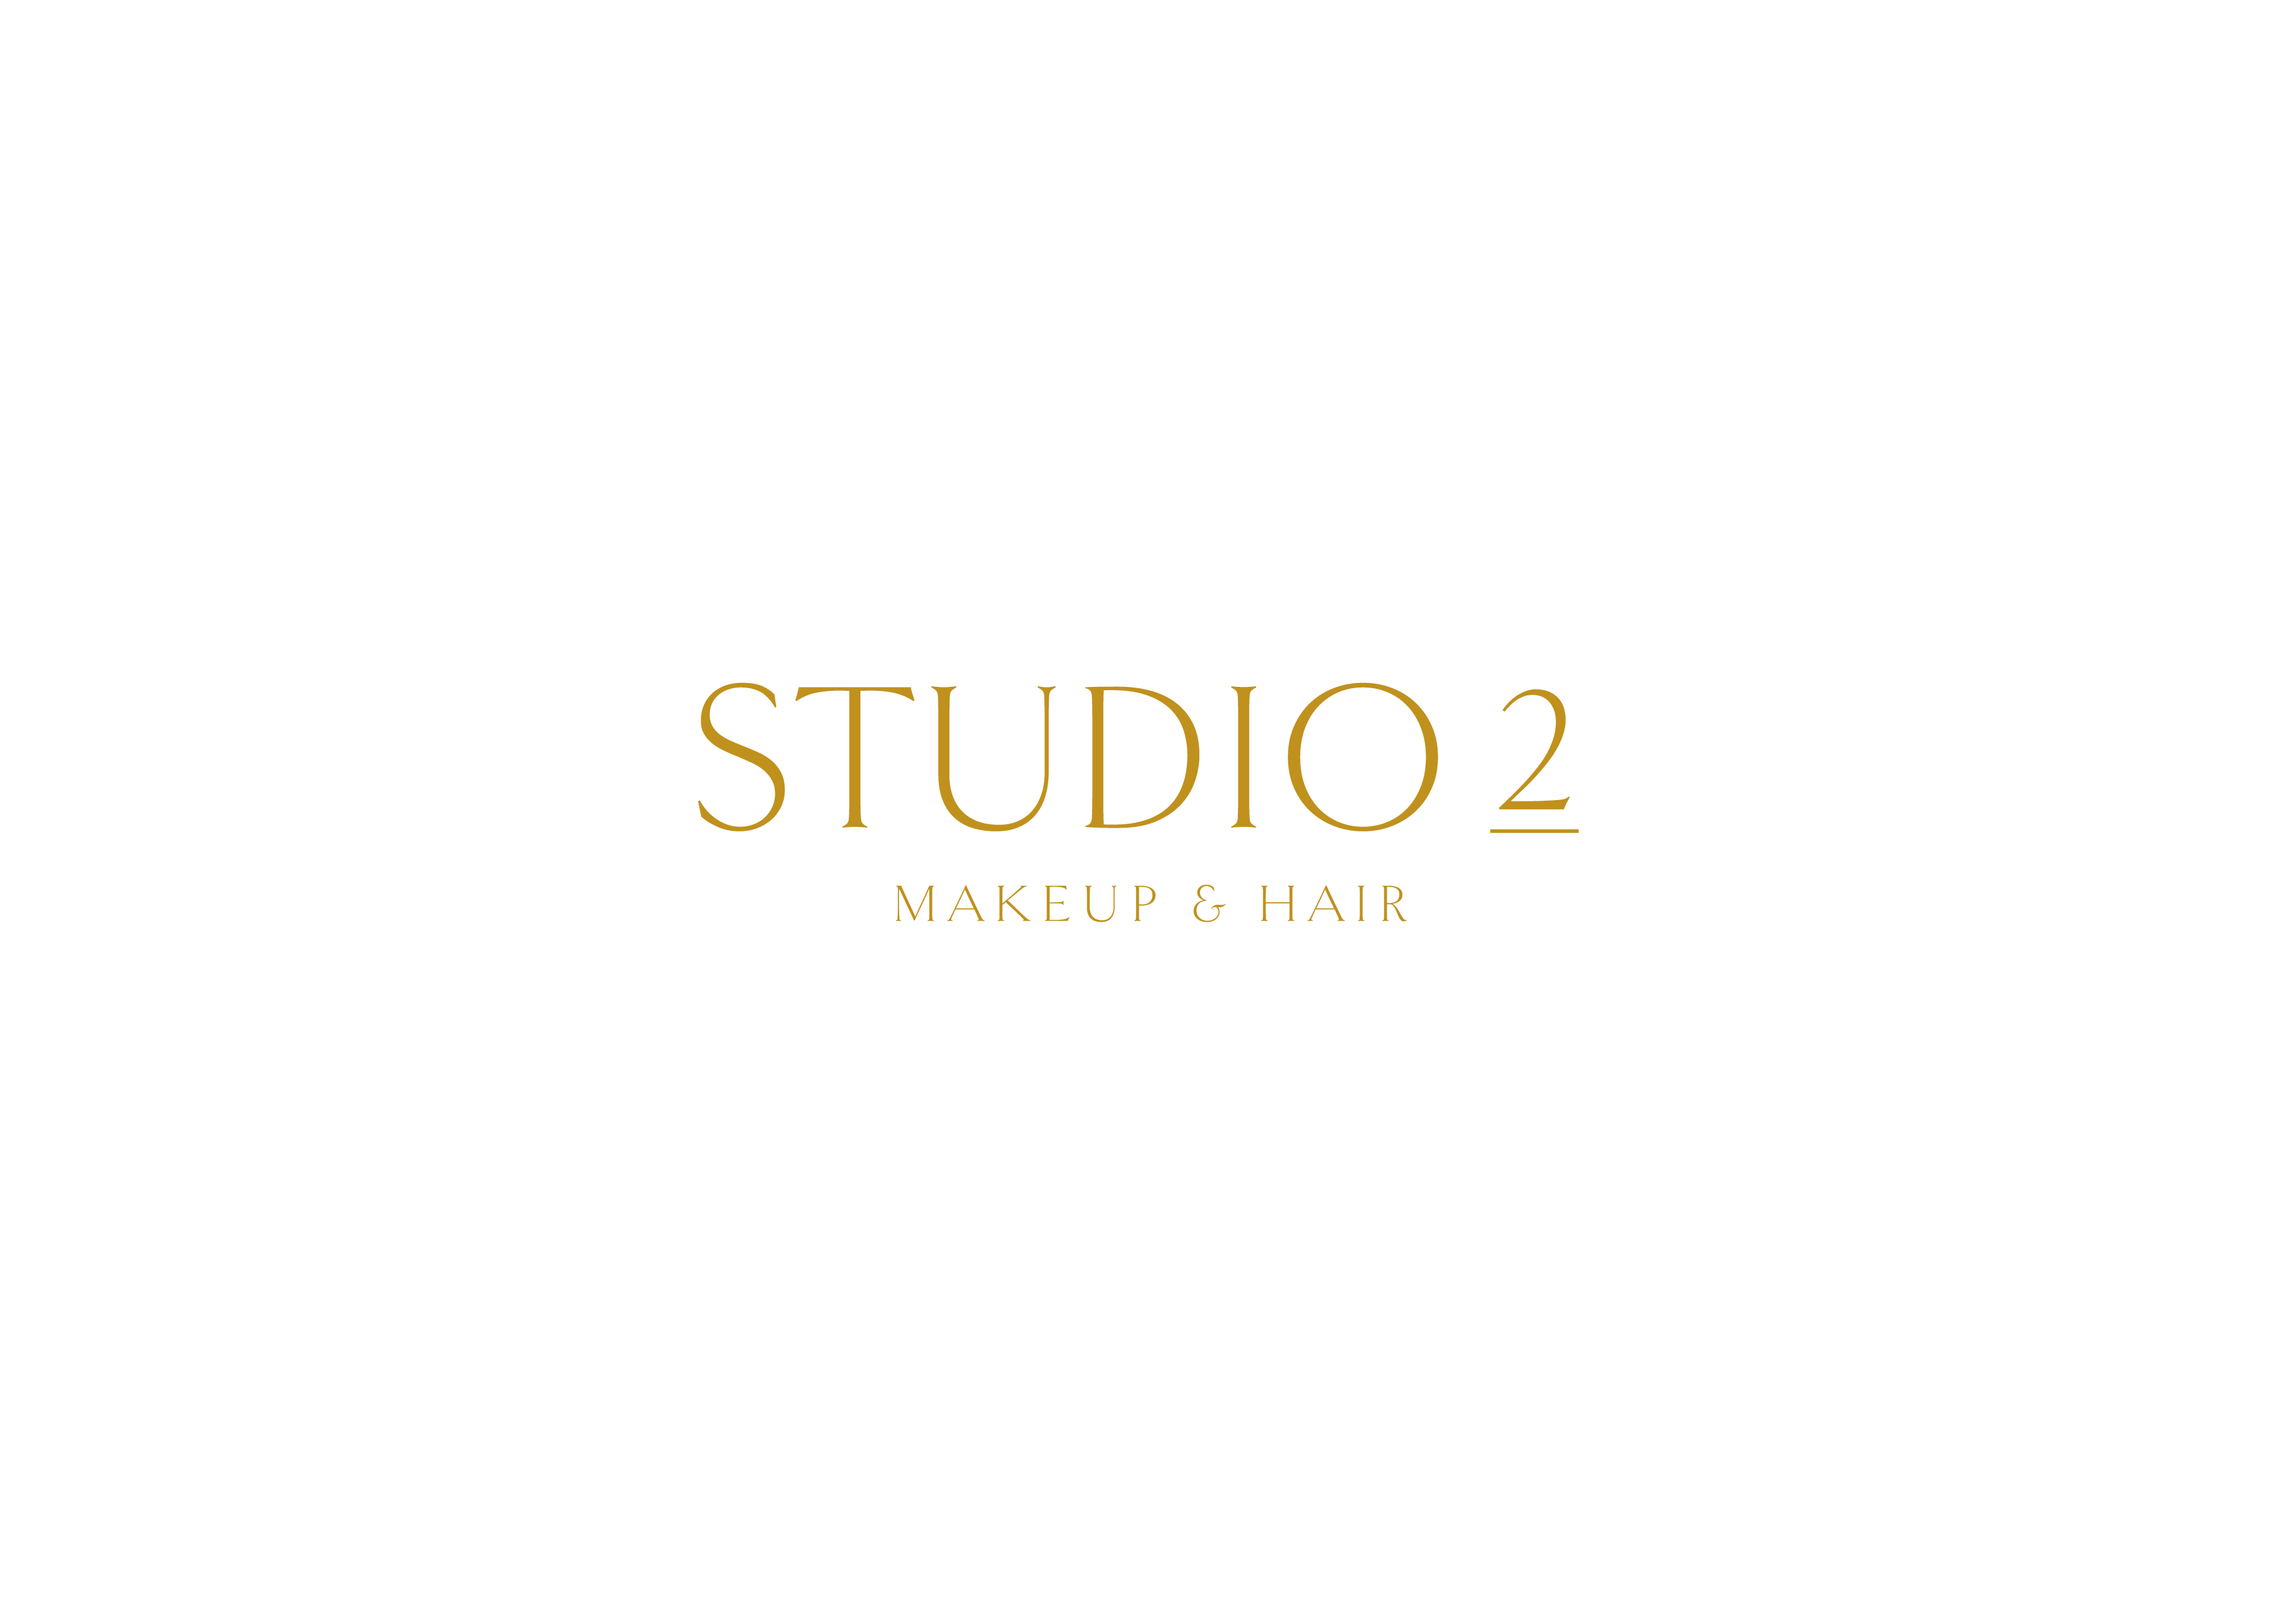 Studio 2 Brand Identity, logo design, styleguide, Studio Mimi Moon